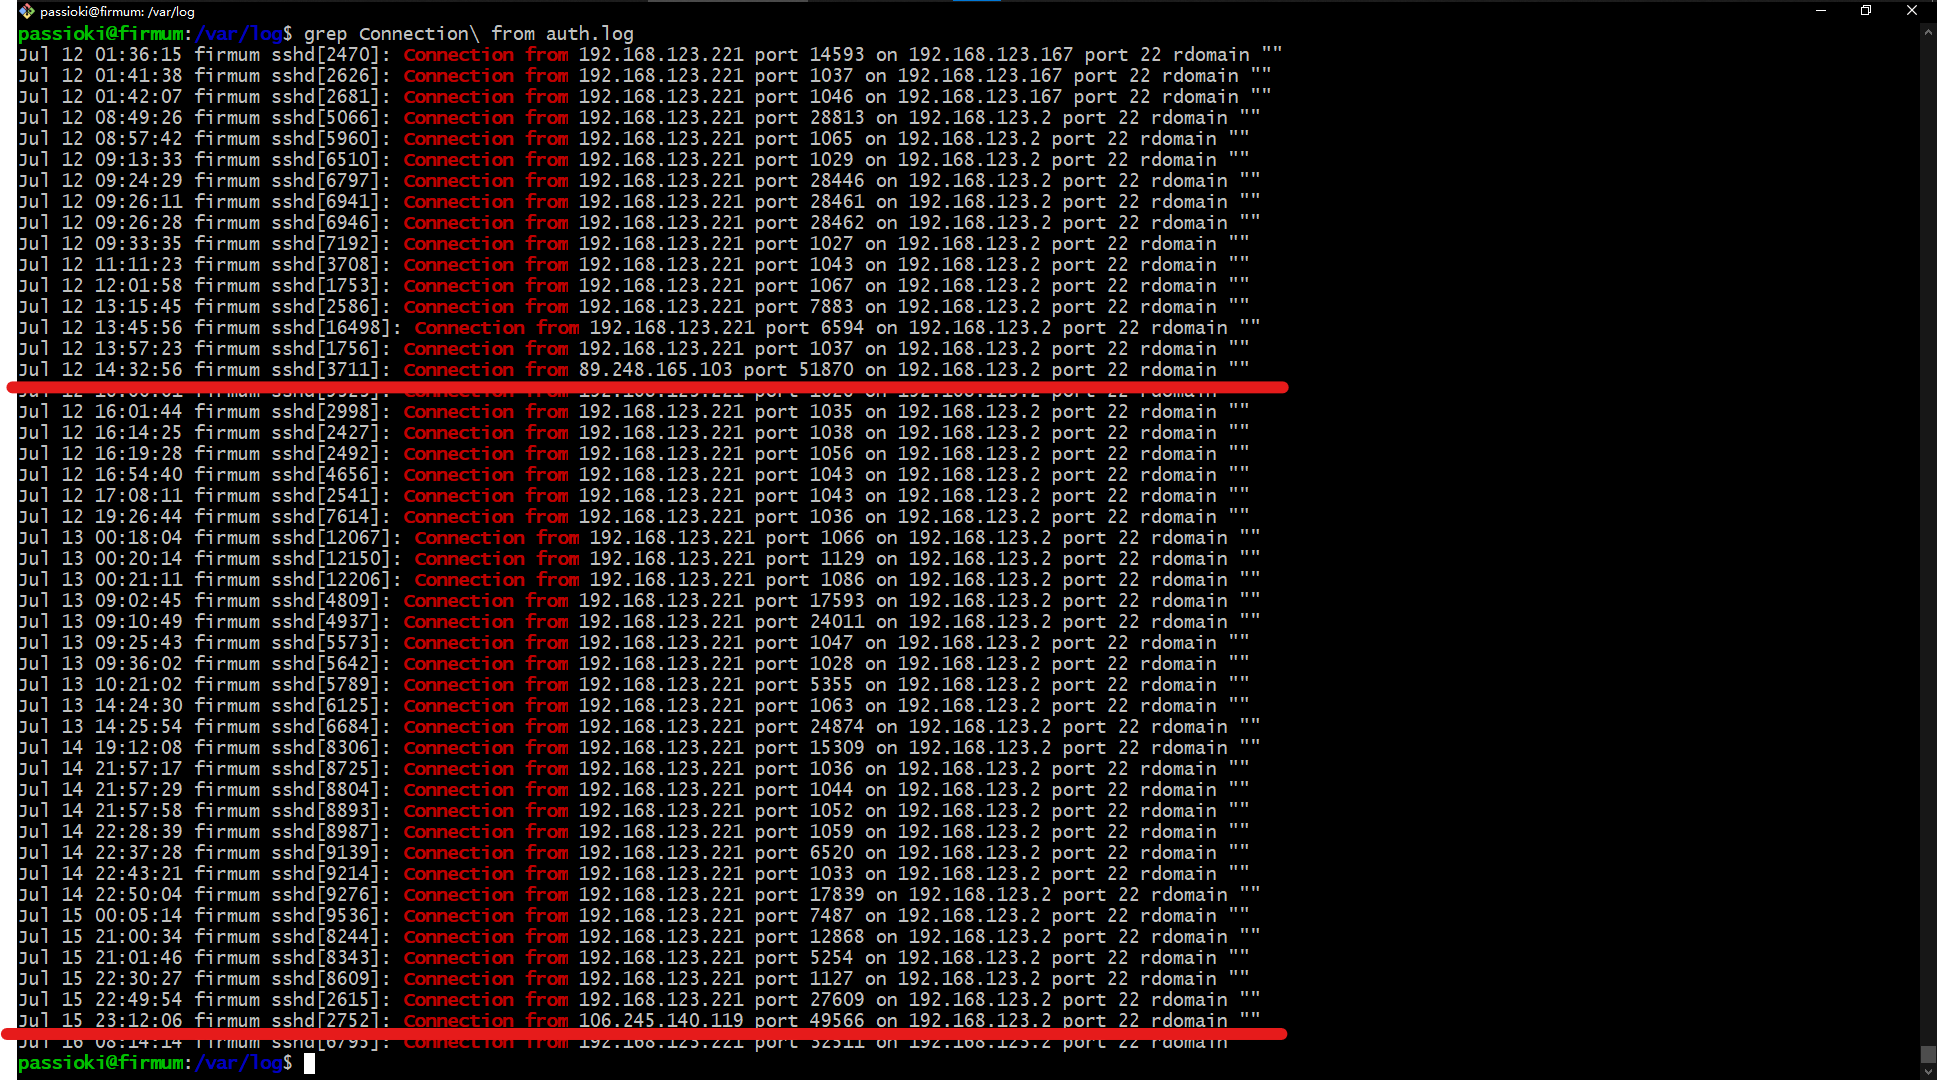 服务器ssh被攻击记录